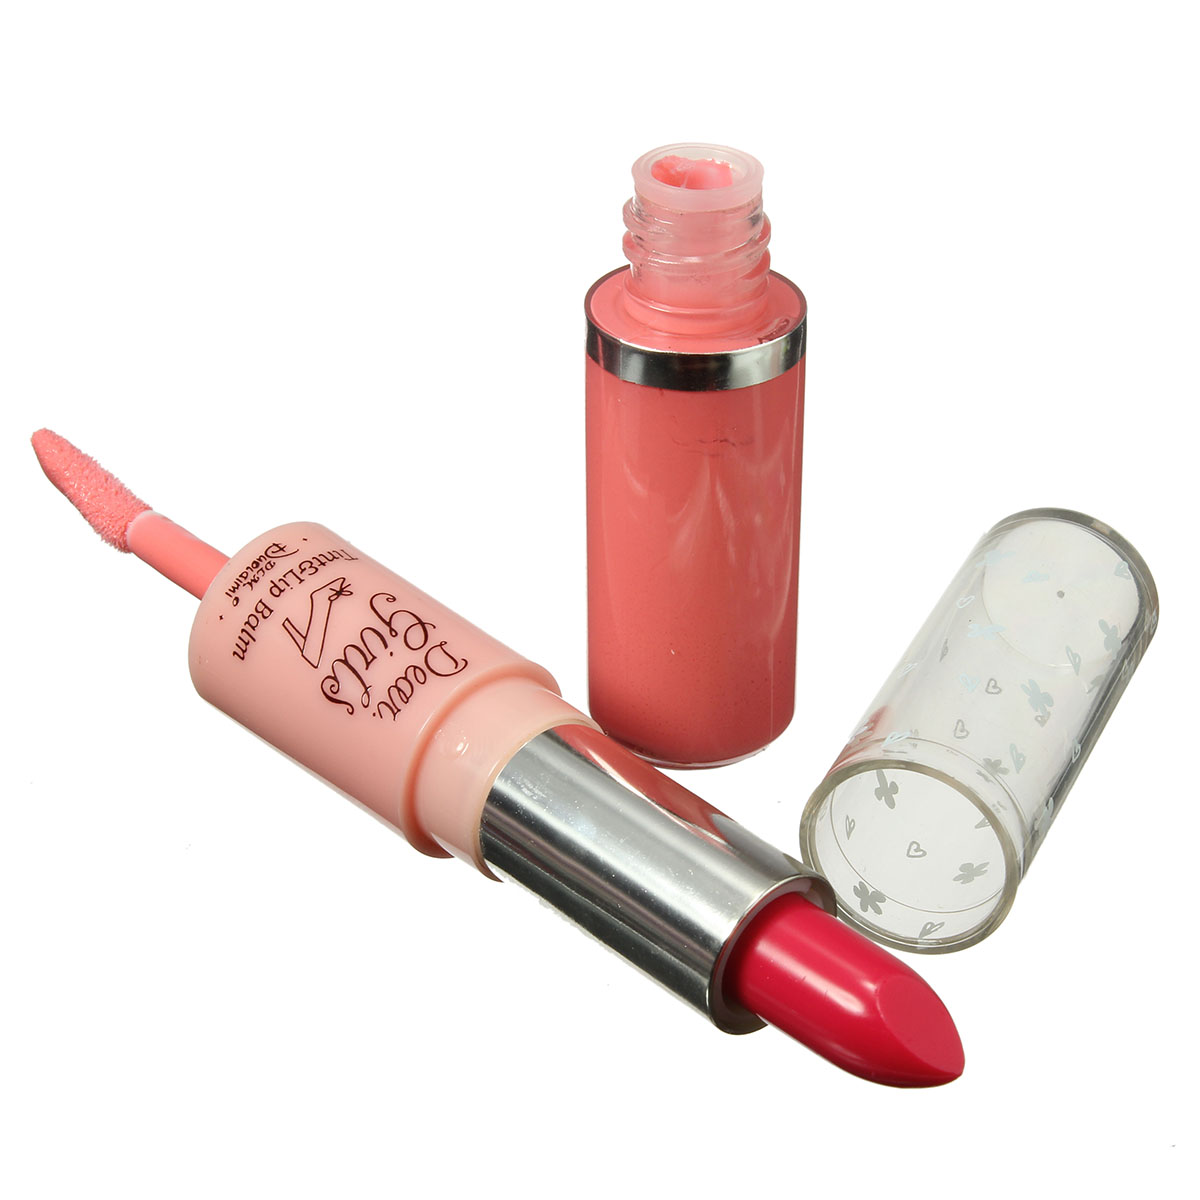 10-Colors-Double-Head-Natural-Lipstick-Moisturing-Brighten-Lip-Gloss-Makeup-Comestic-1124974